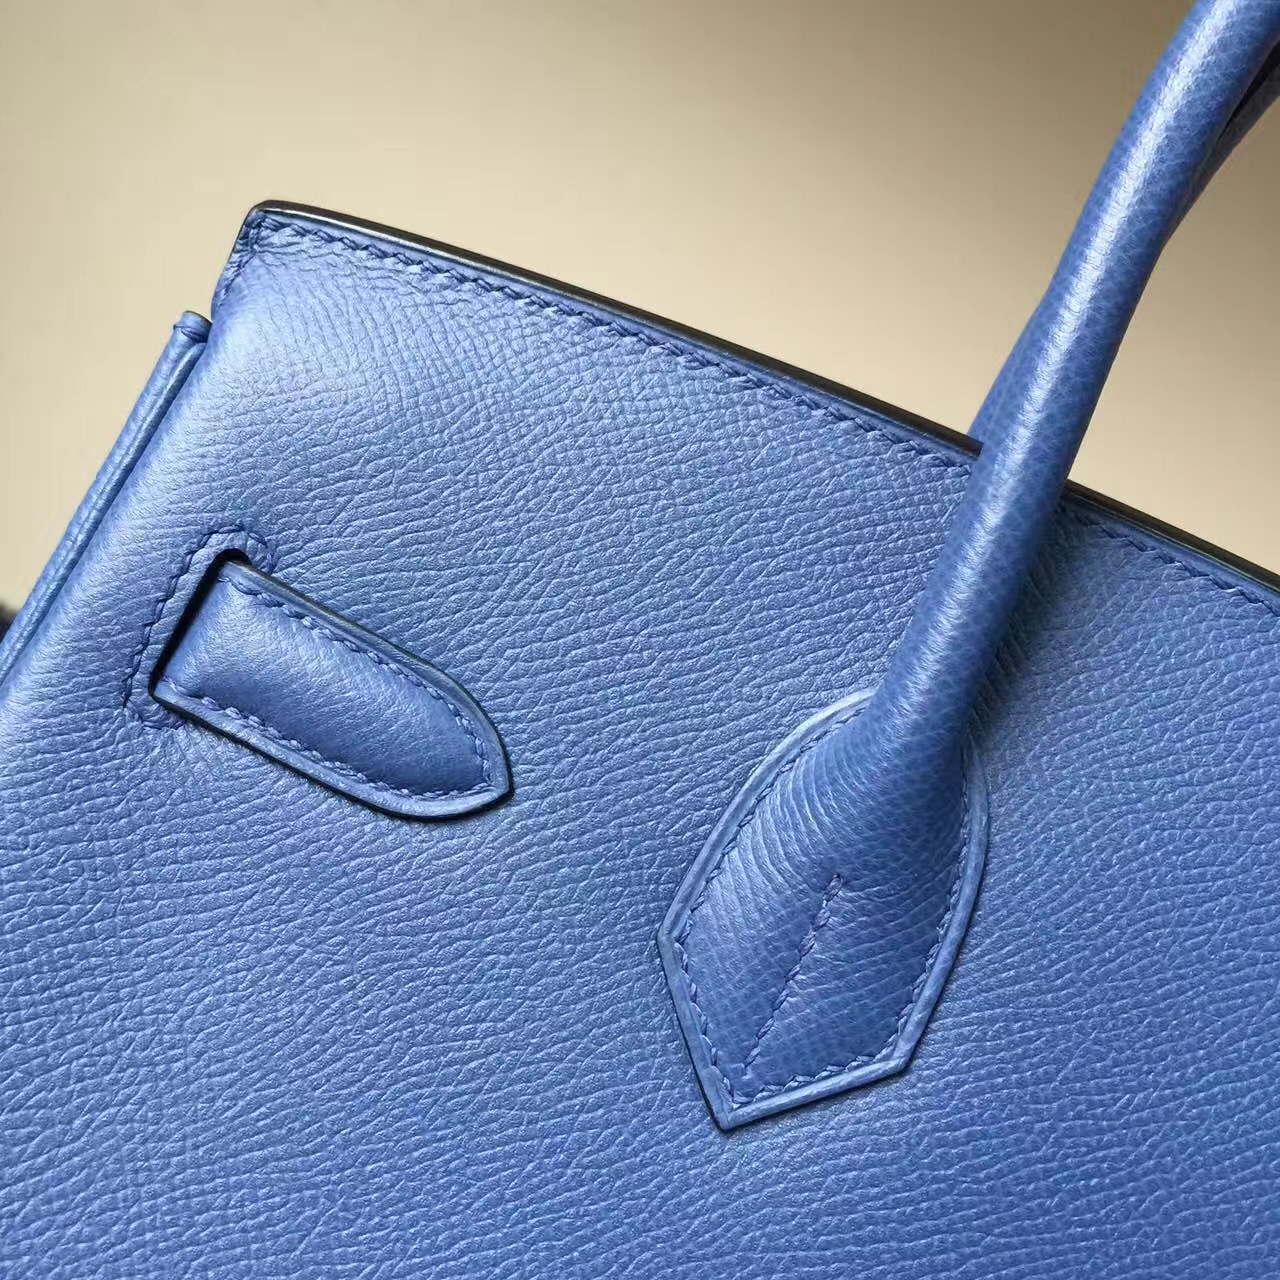 New Arrival Hermes Birkin Bag30cm in R2 Agate Blue Epsom Leather